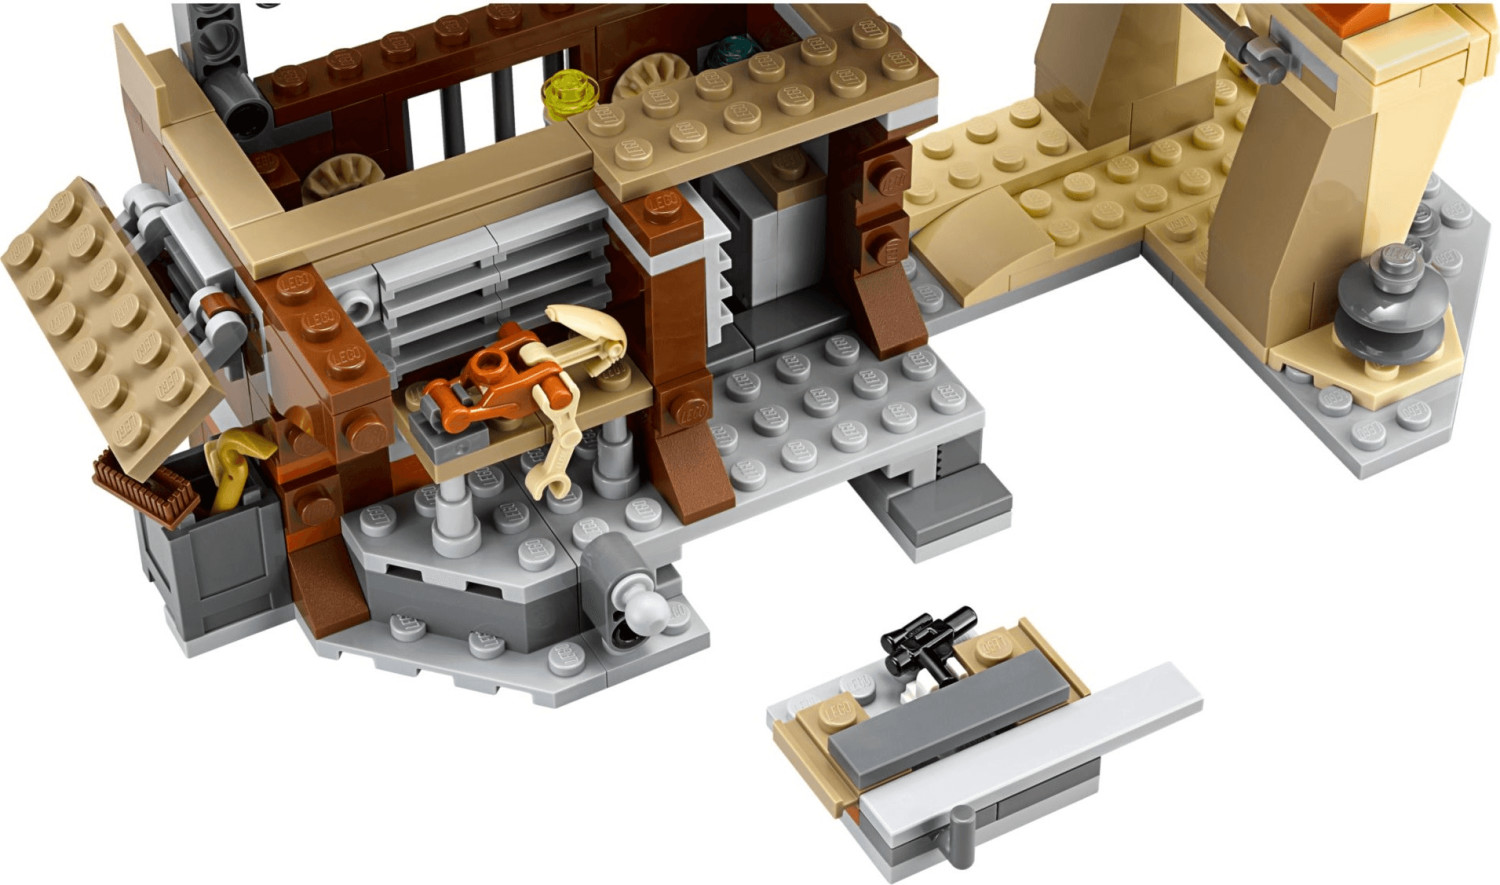 LEGO Star Wars 75338 pas cher, Embuscade sur Ferrix